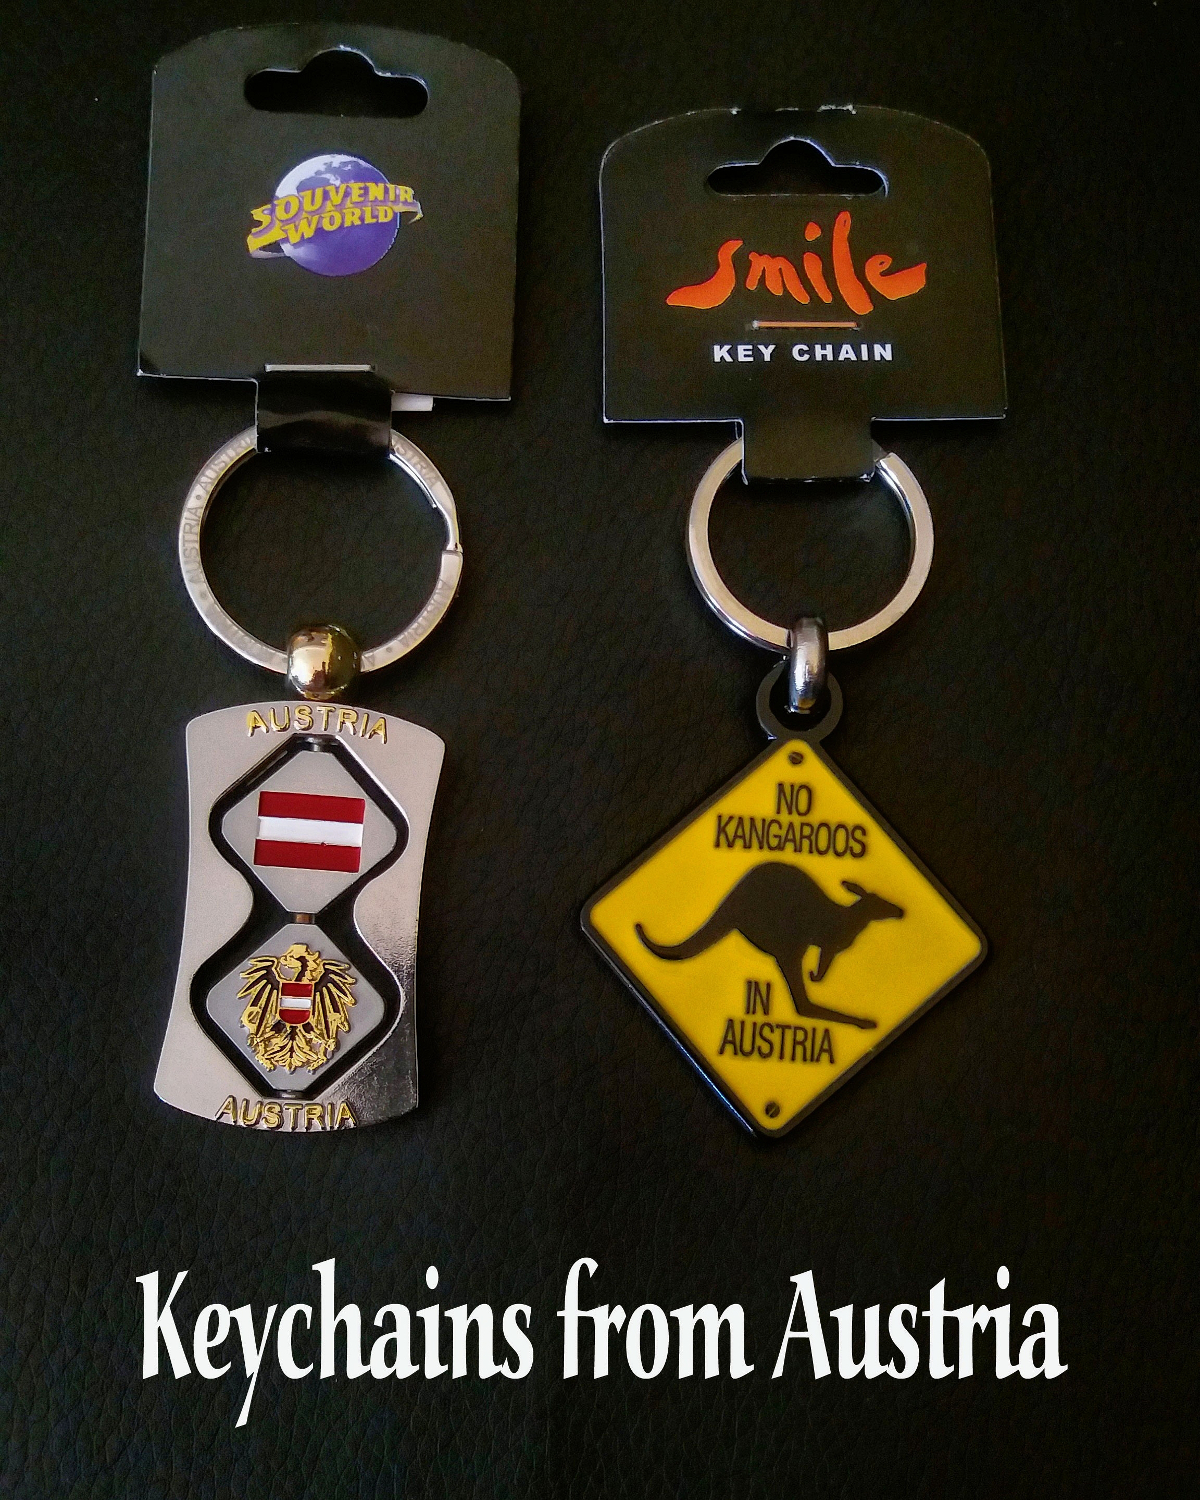 New keychains from Austria